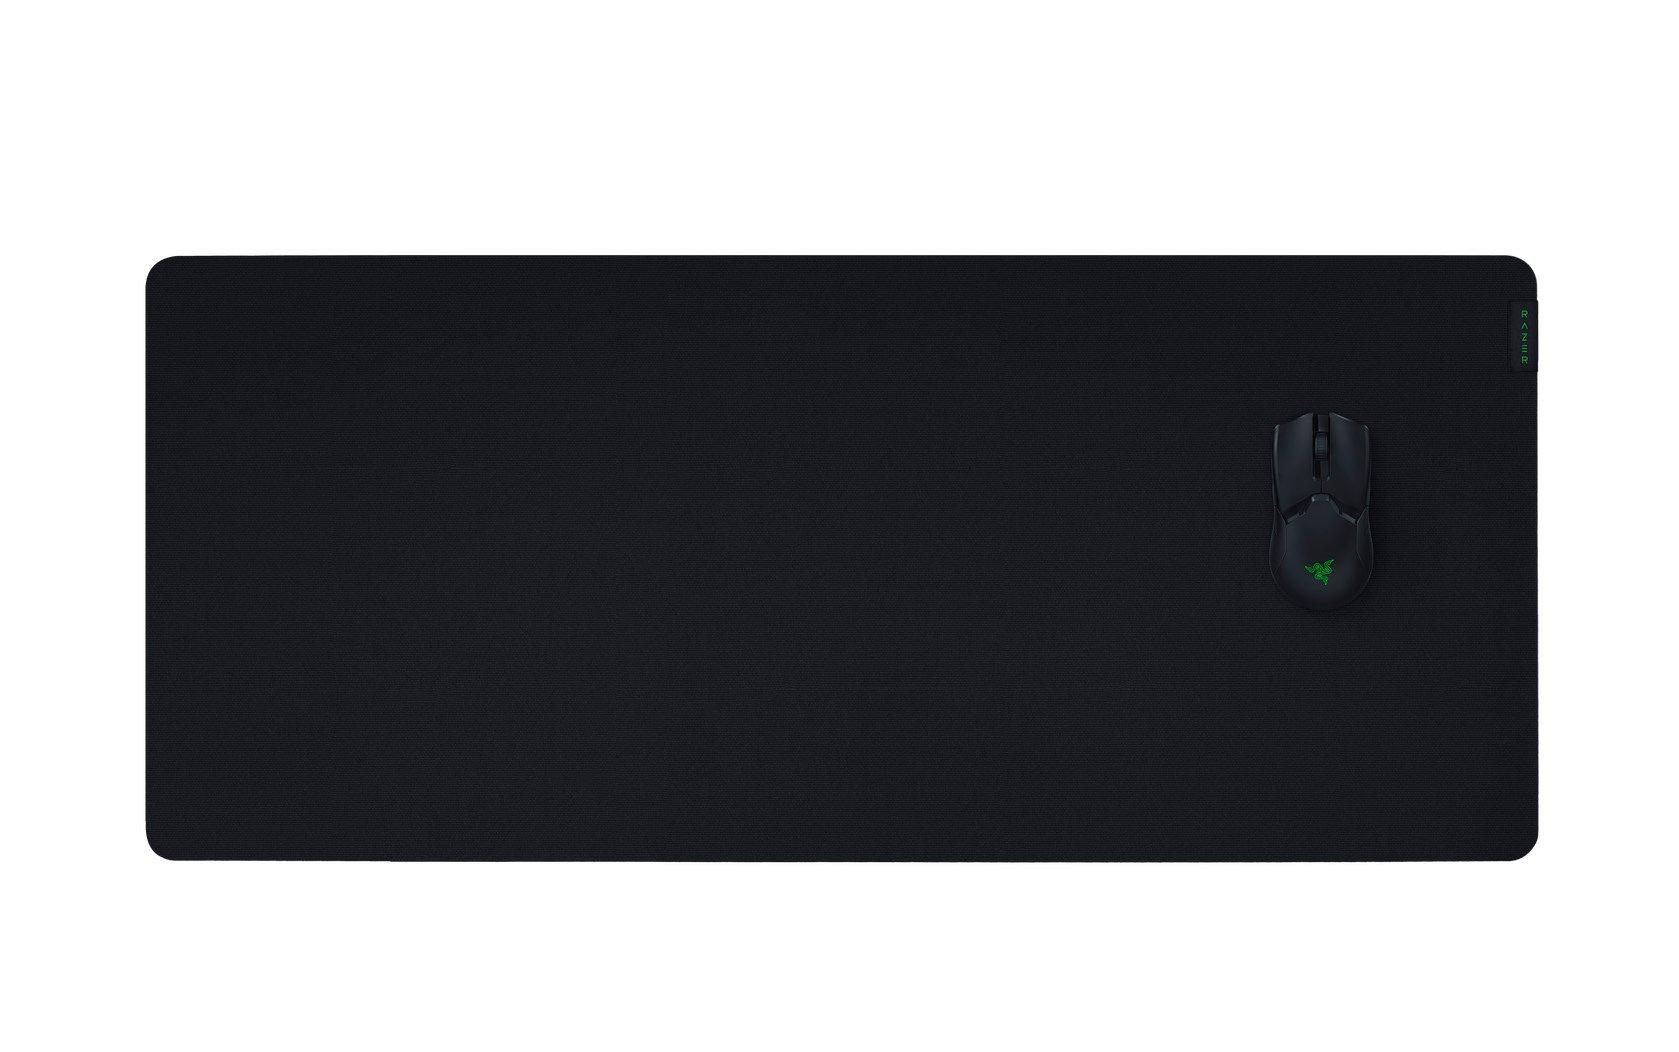 Razer Gigantus V2 XXL Soft Gaming Mouse Mat | GameStop